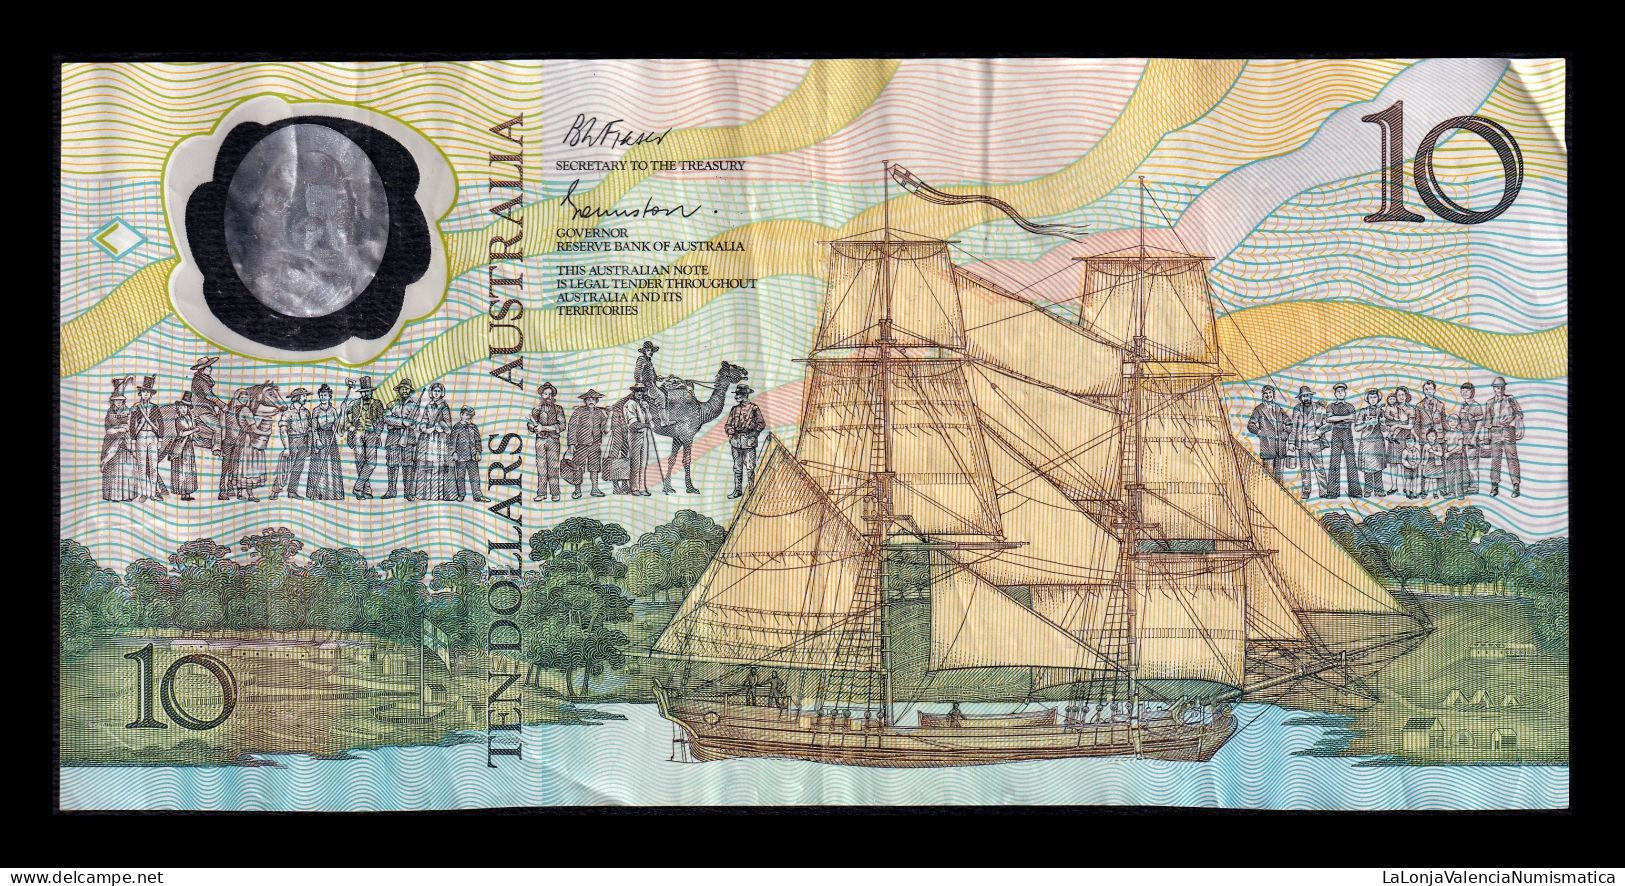 Australia 10 Dollars Commemorative 1988 Pick 49b Polymer Mbc Vf - 1988 (10$ Polymer Notes)